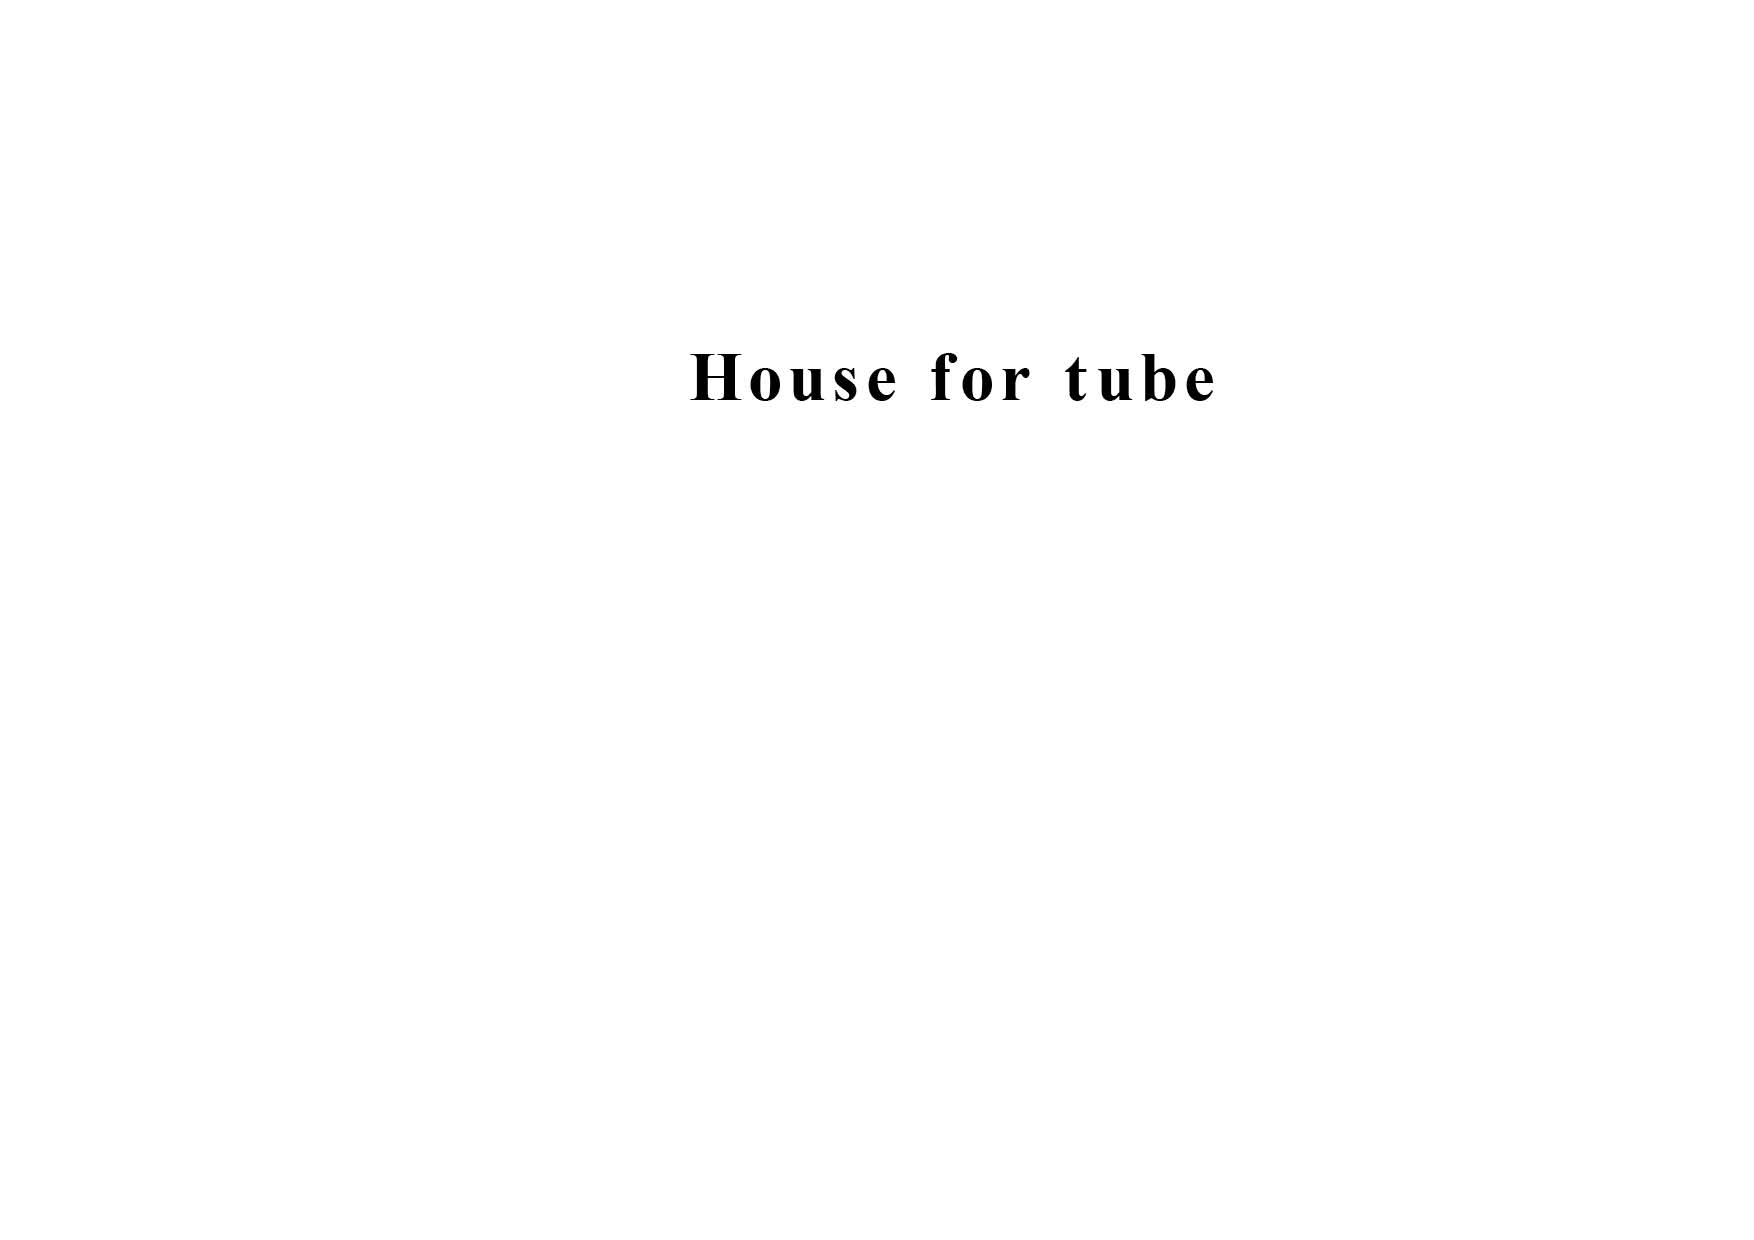 AFTERPOSTOFFICEのhousefortubeという本の画像